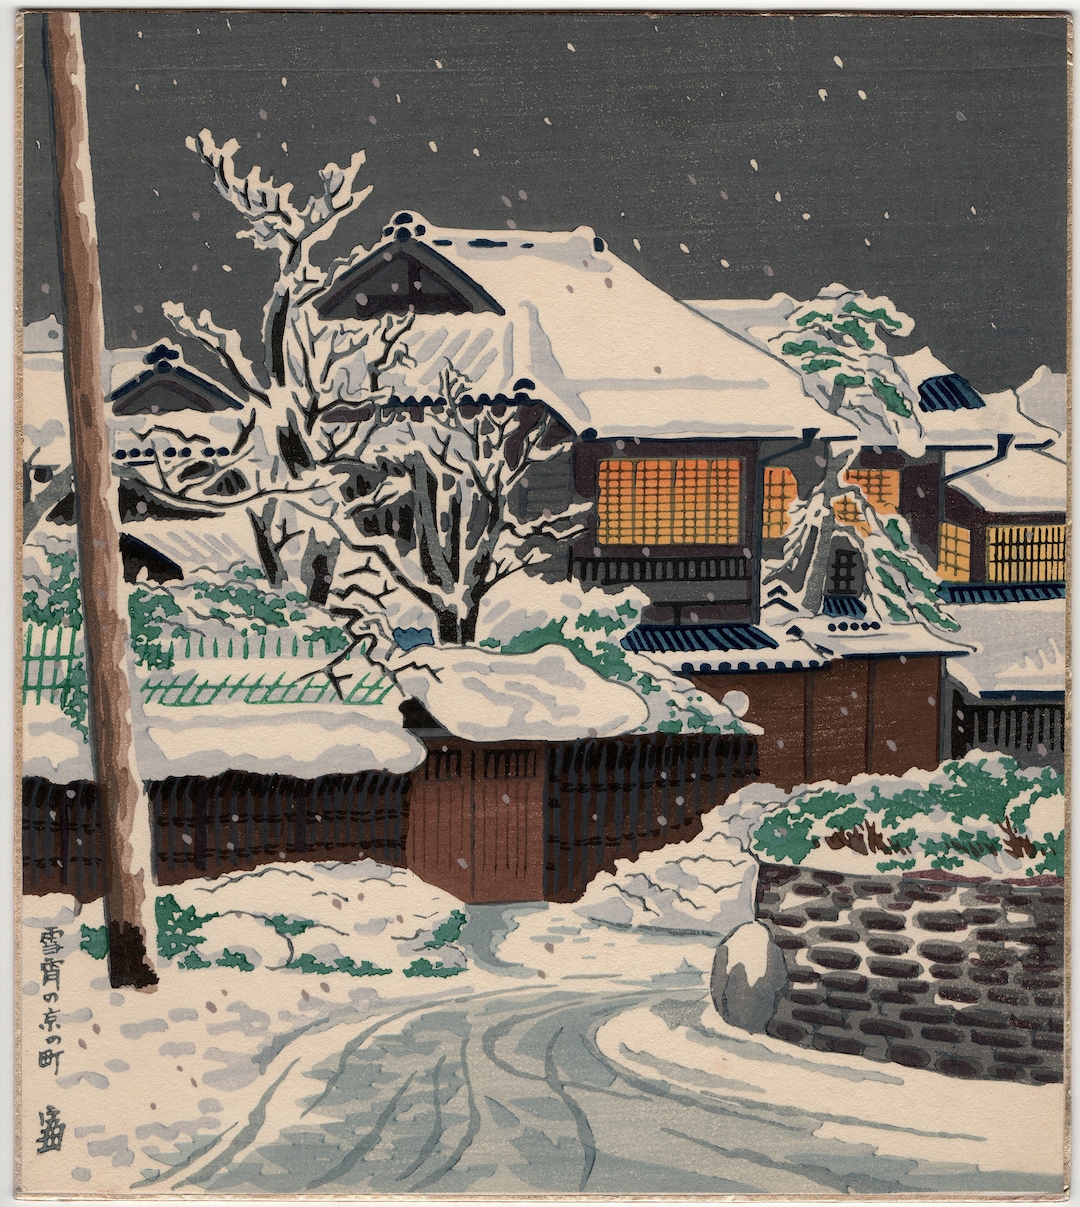 Tokuriki Tomikichiro, one Snowy Evening of Kyoto. - Etsy